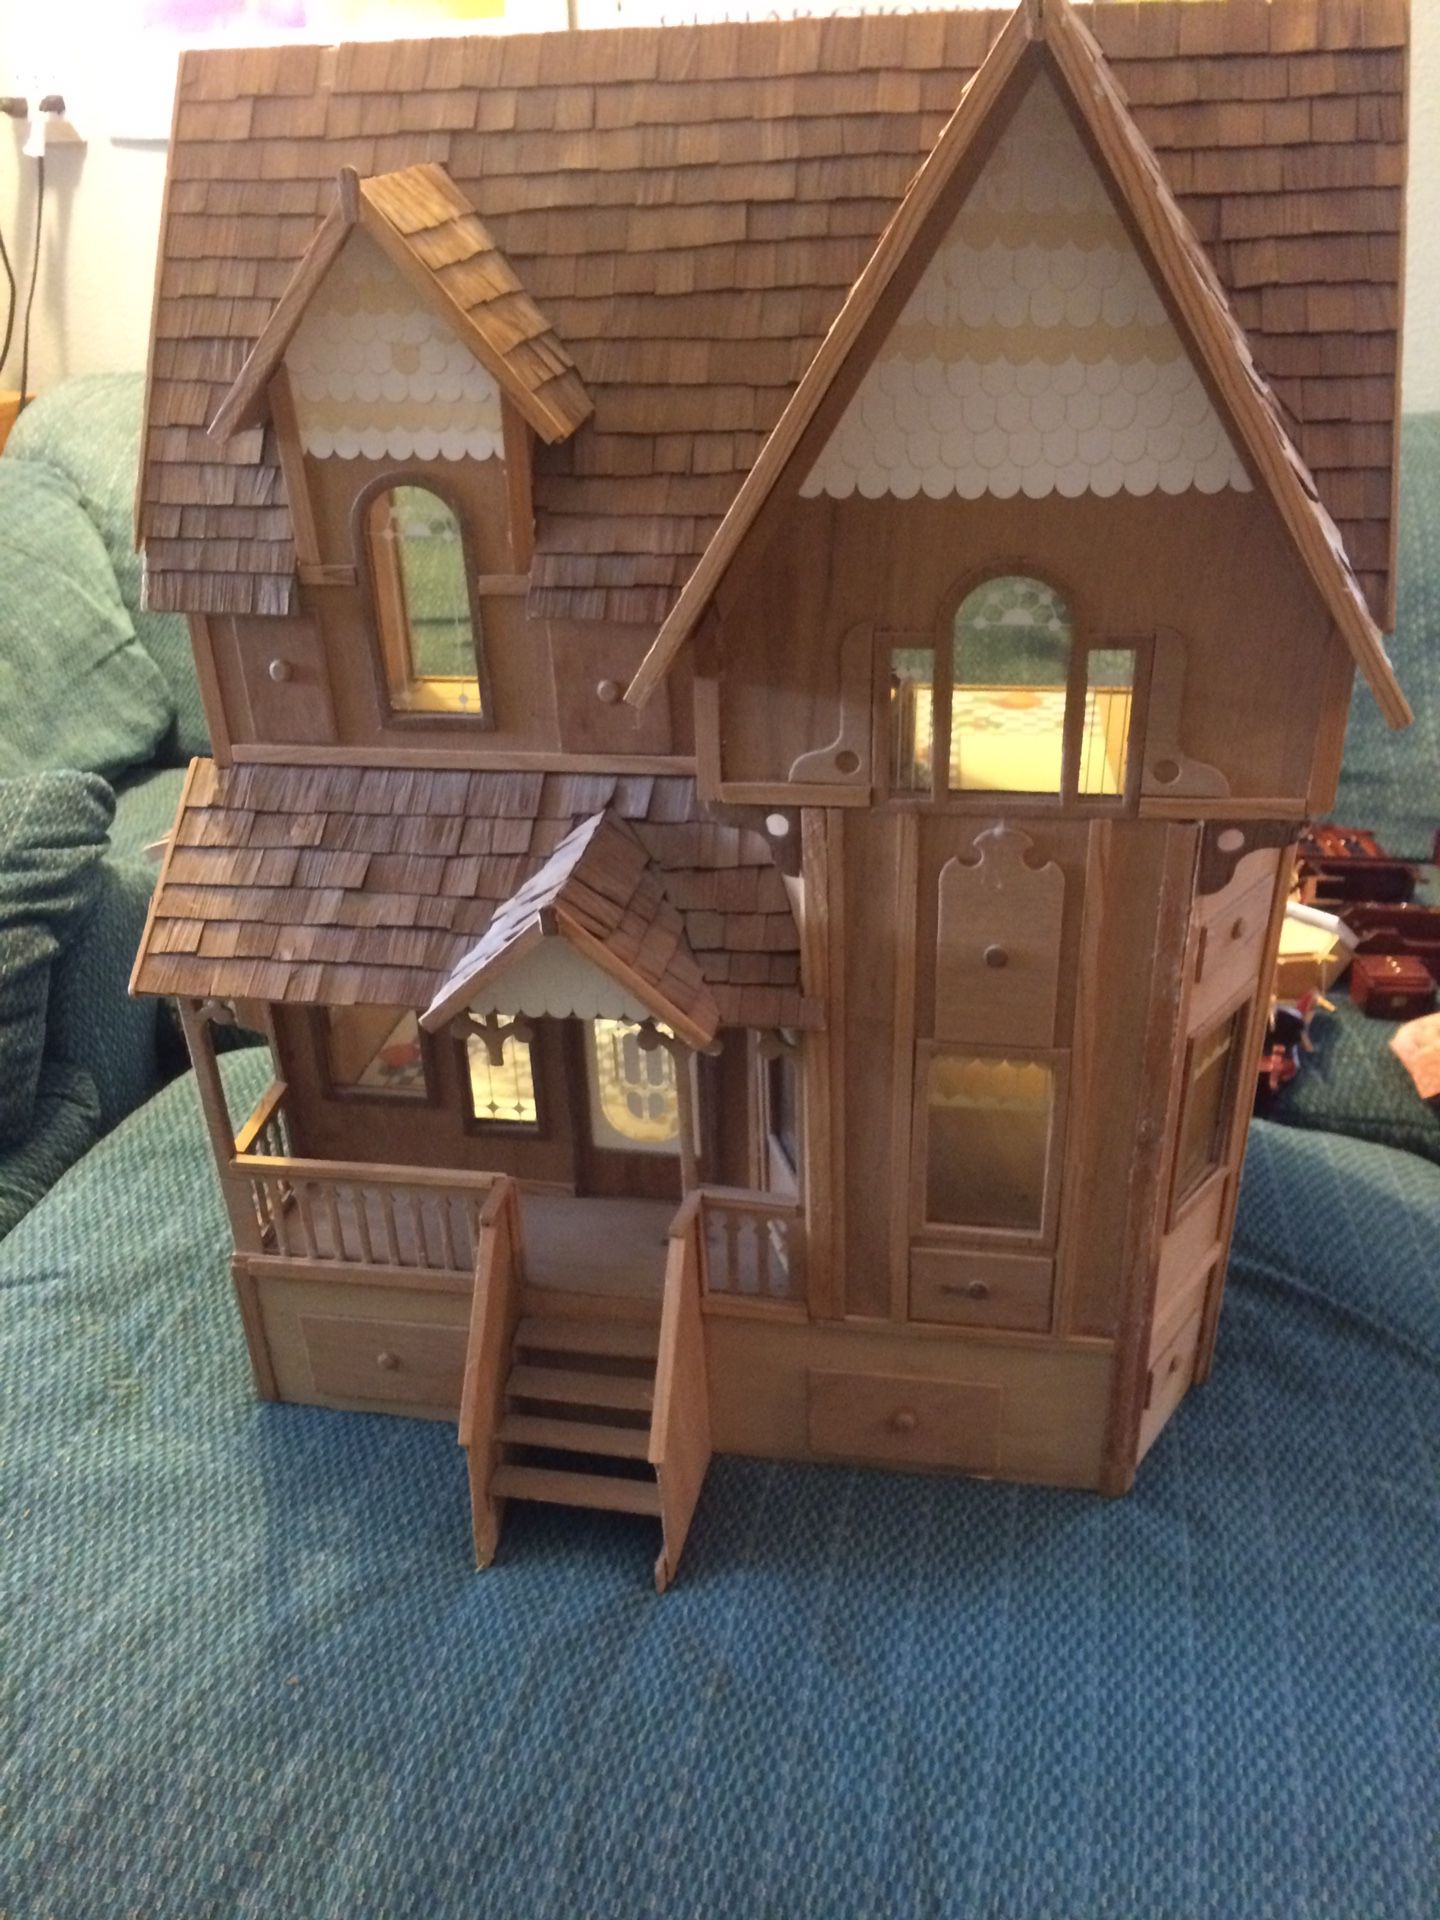 Wood dollhouse - huge!